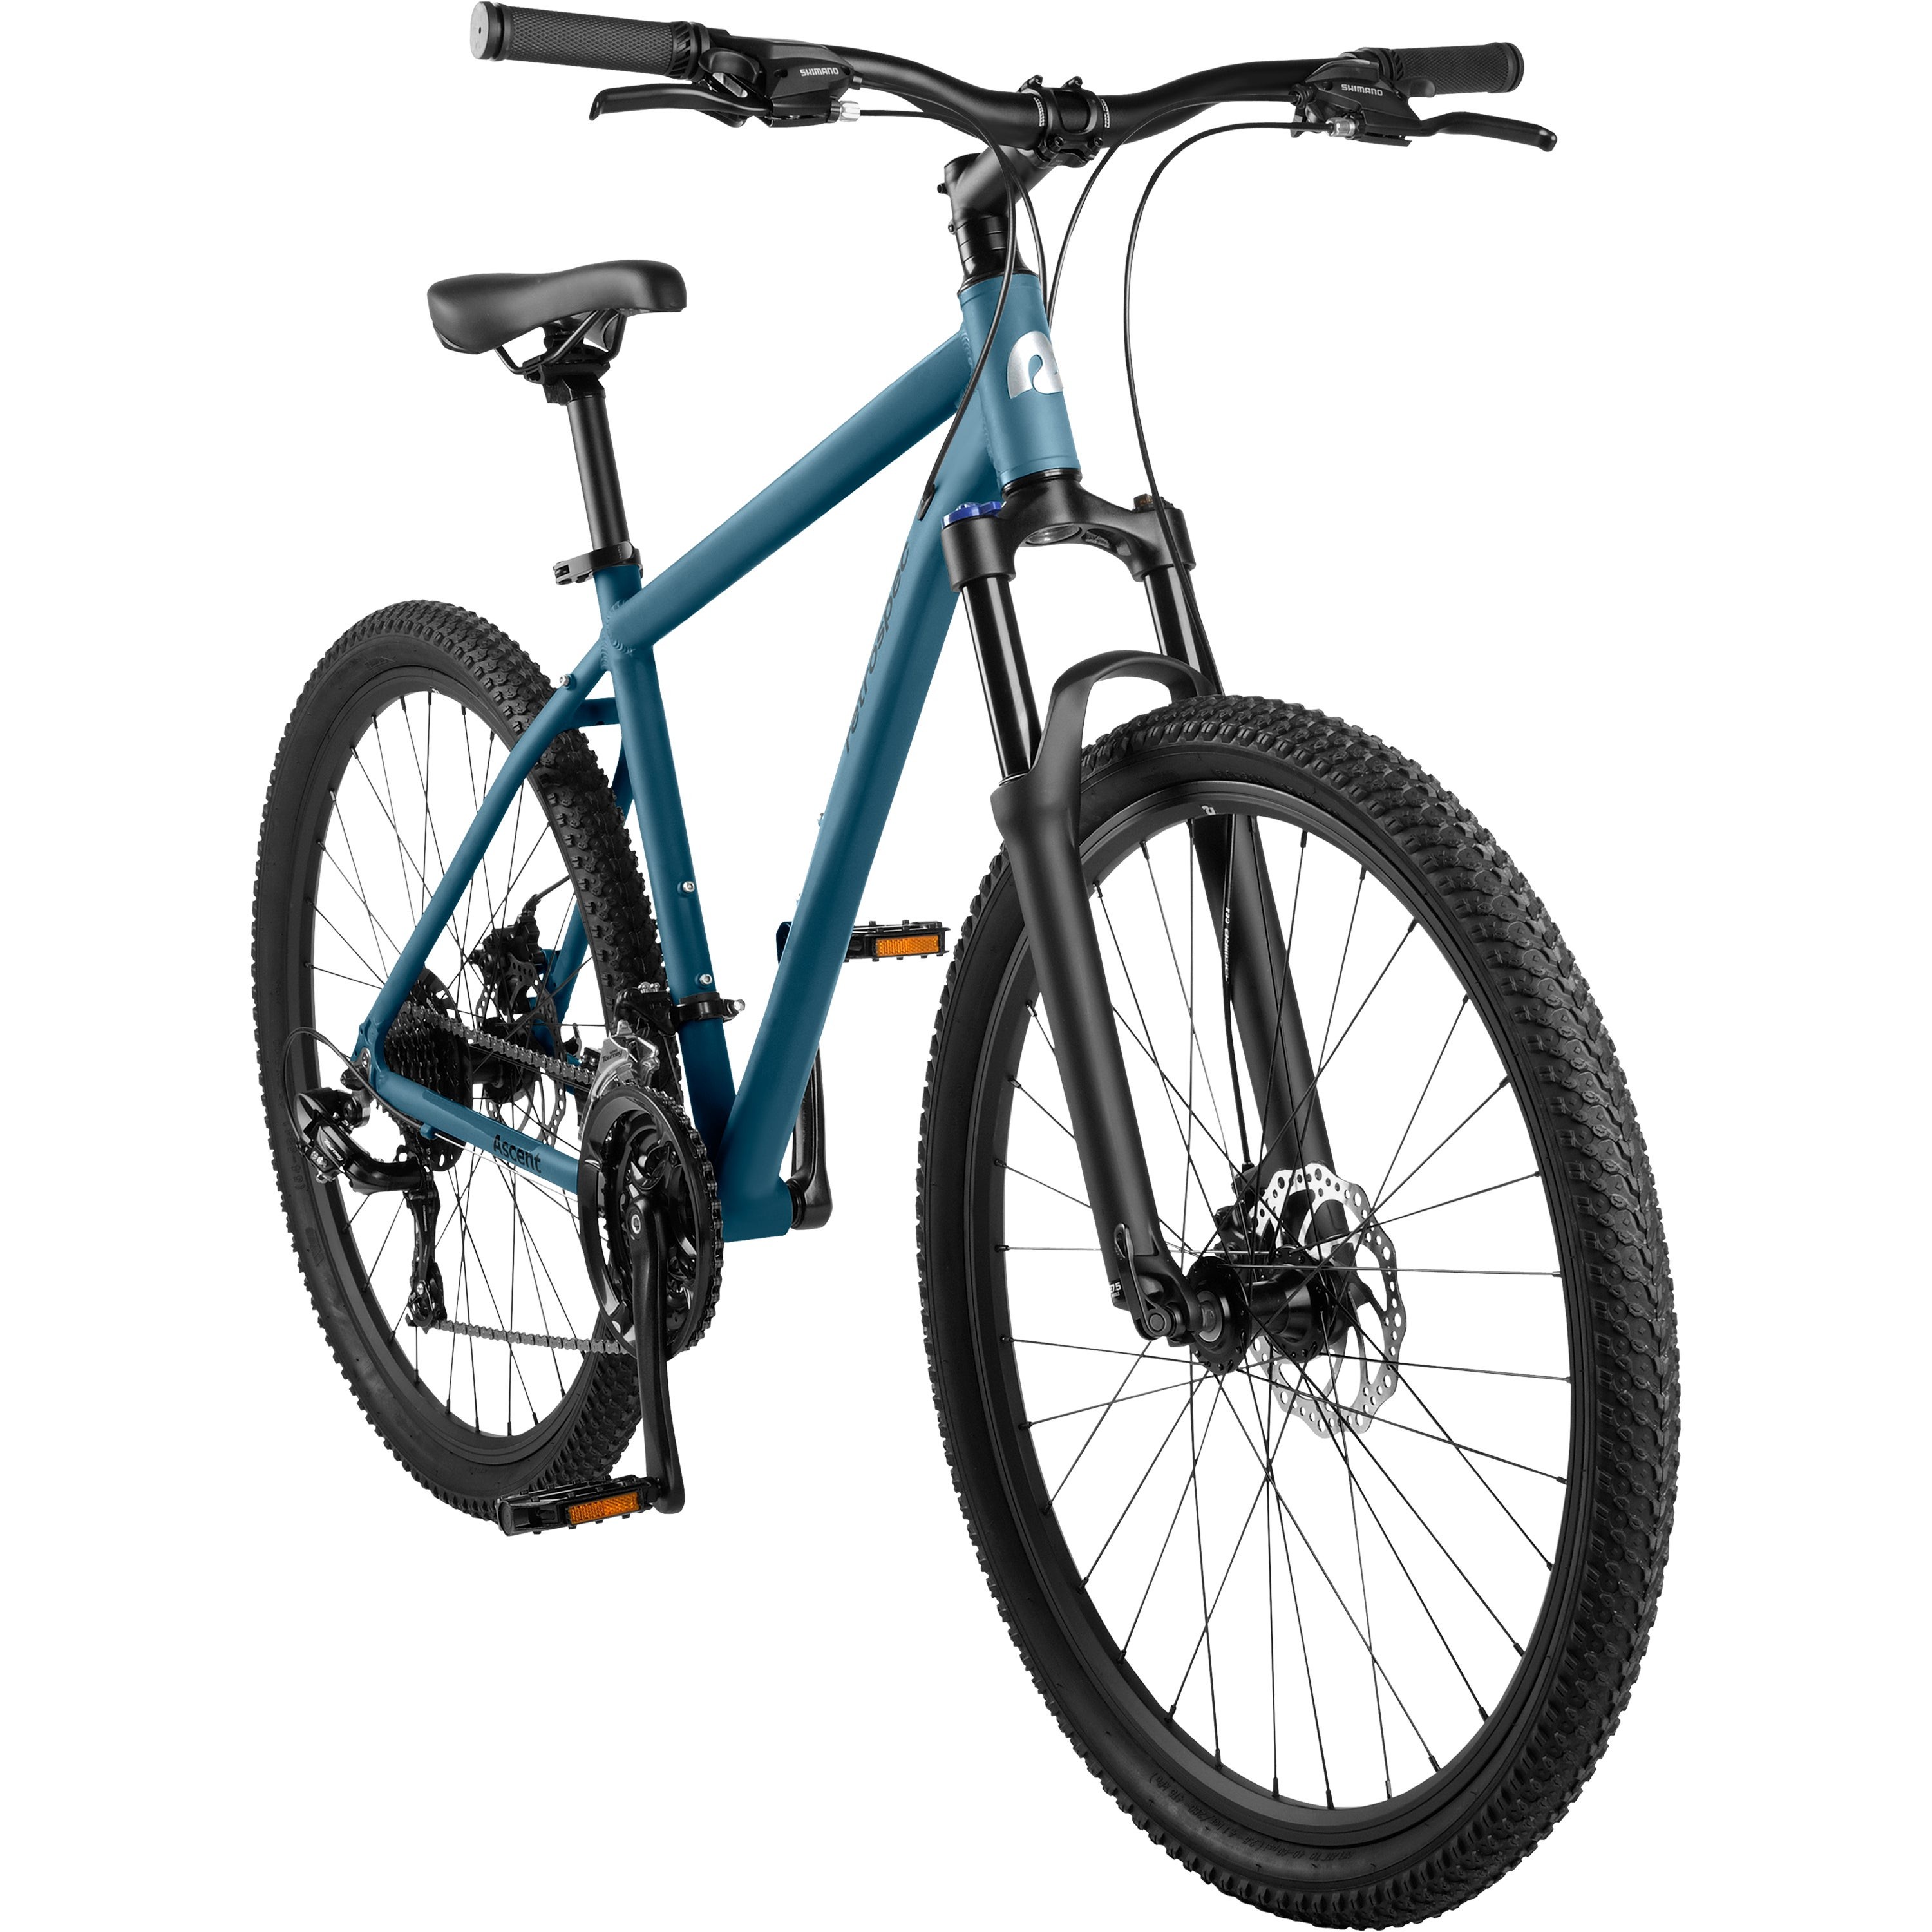 Ascent 27.5" Wheel Mountain Bike - 18" Size - 21-Speed Superior Blue